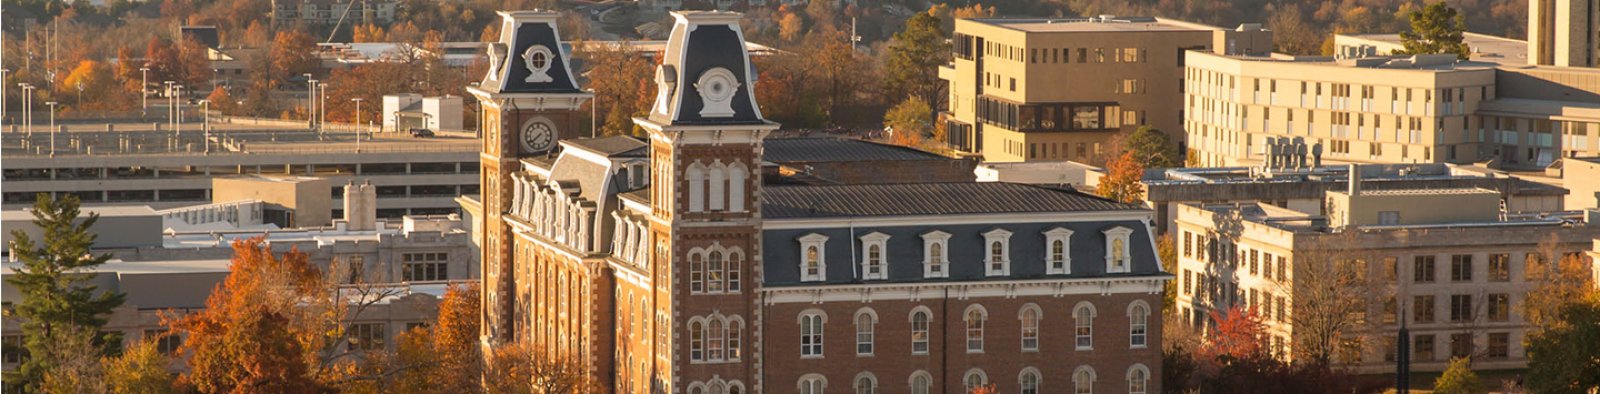 University of Arkansas Campus photo.